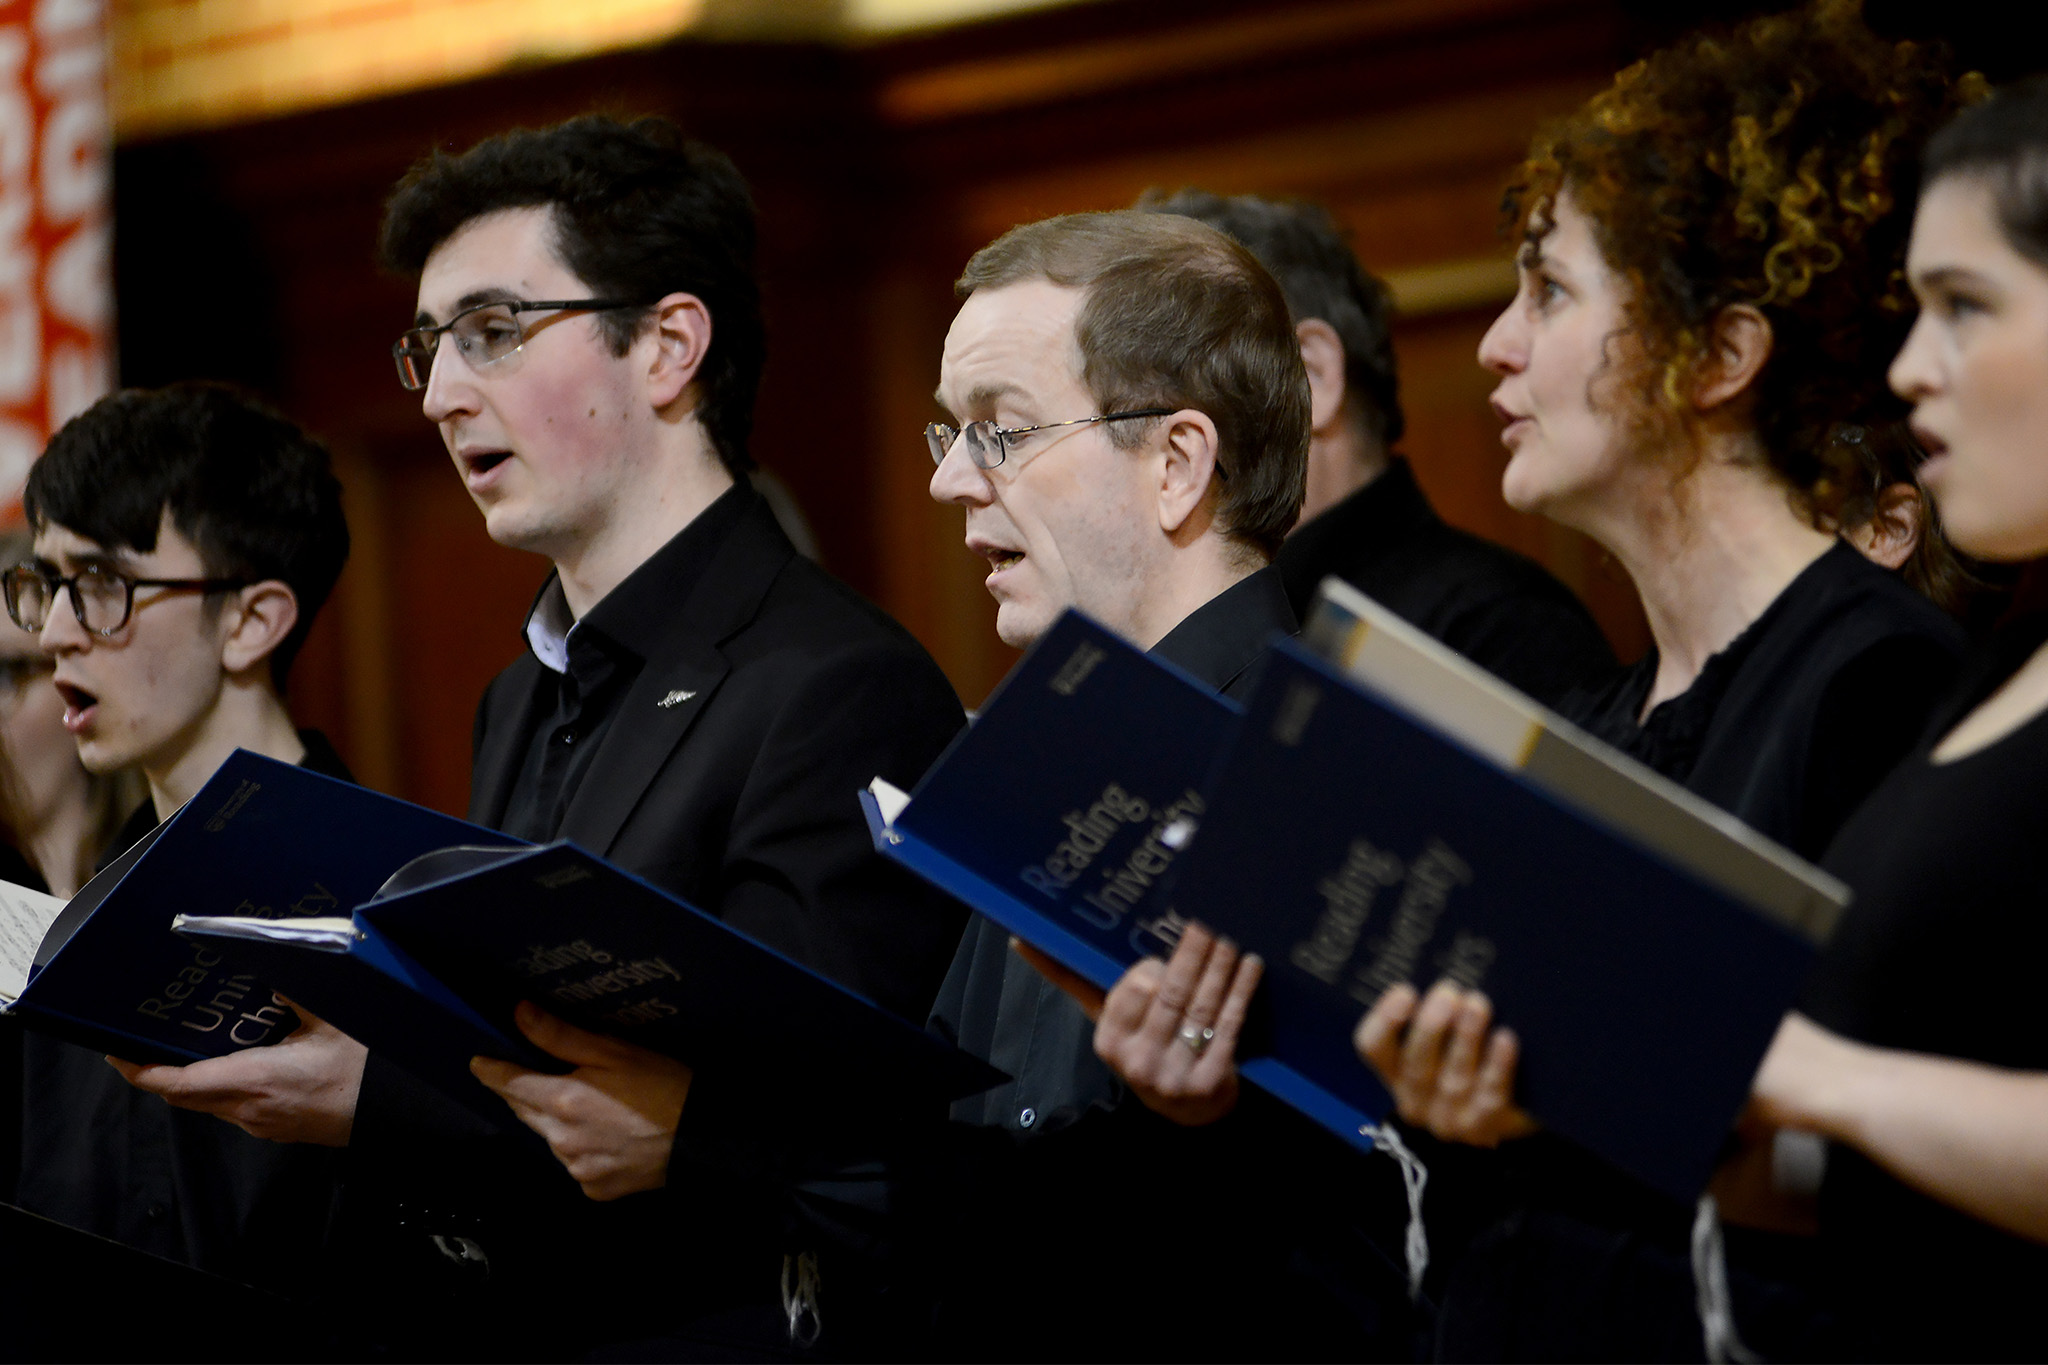 Choir singers close-up at the Ben Pedley memorial concert 